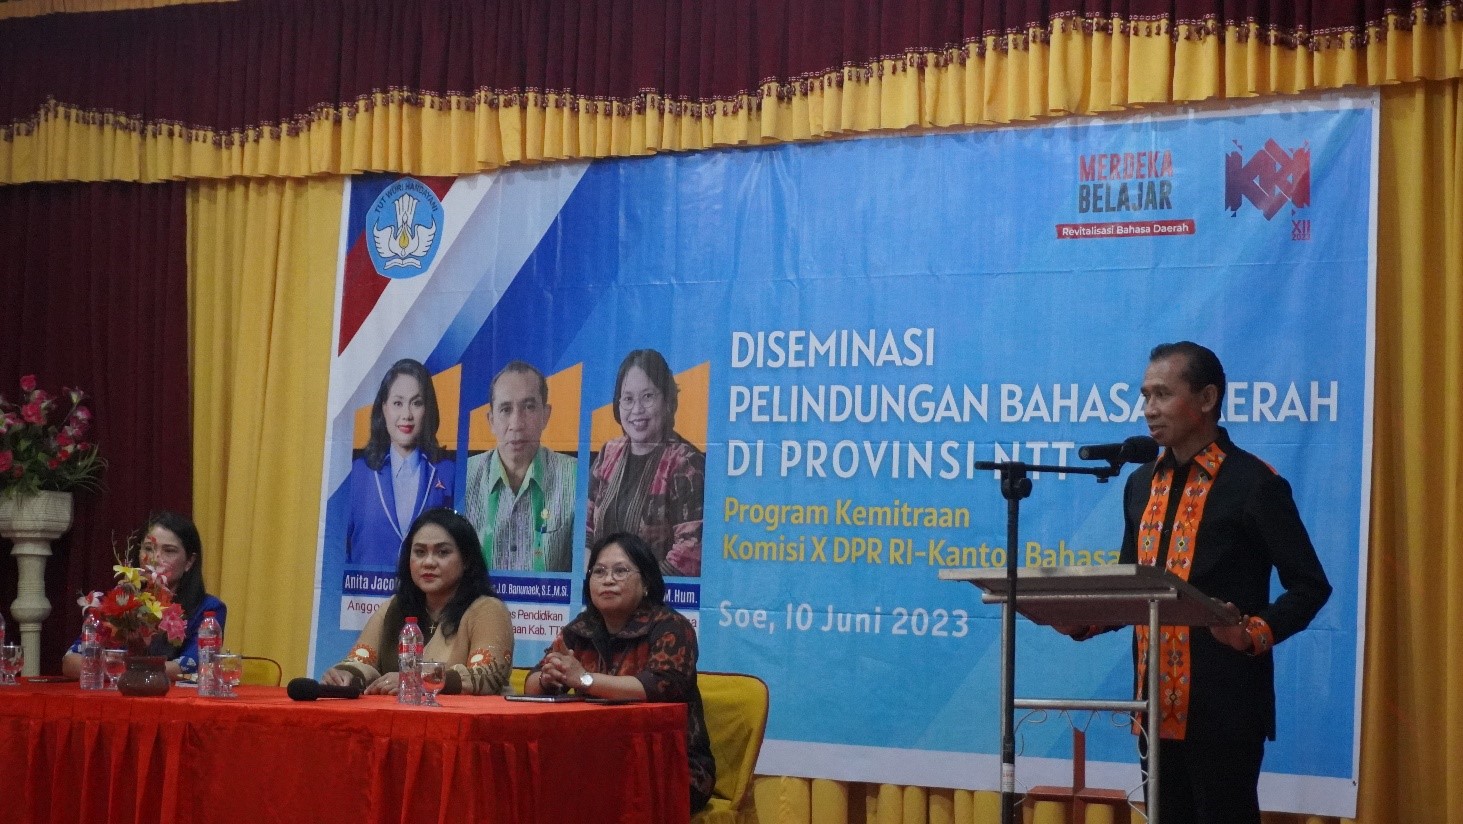 Dukungan Komisi X DPR-RI kepada Kemendikbudristek dalam Upaya Pelestarian Bahasa Daerah di Nusa Tenggara Timur